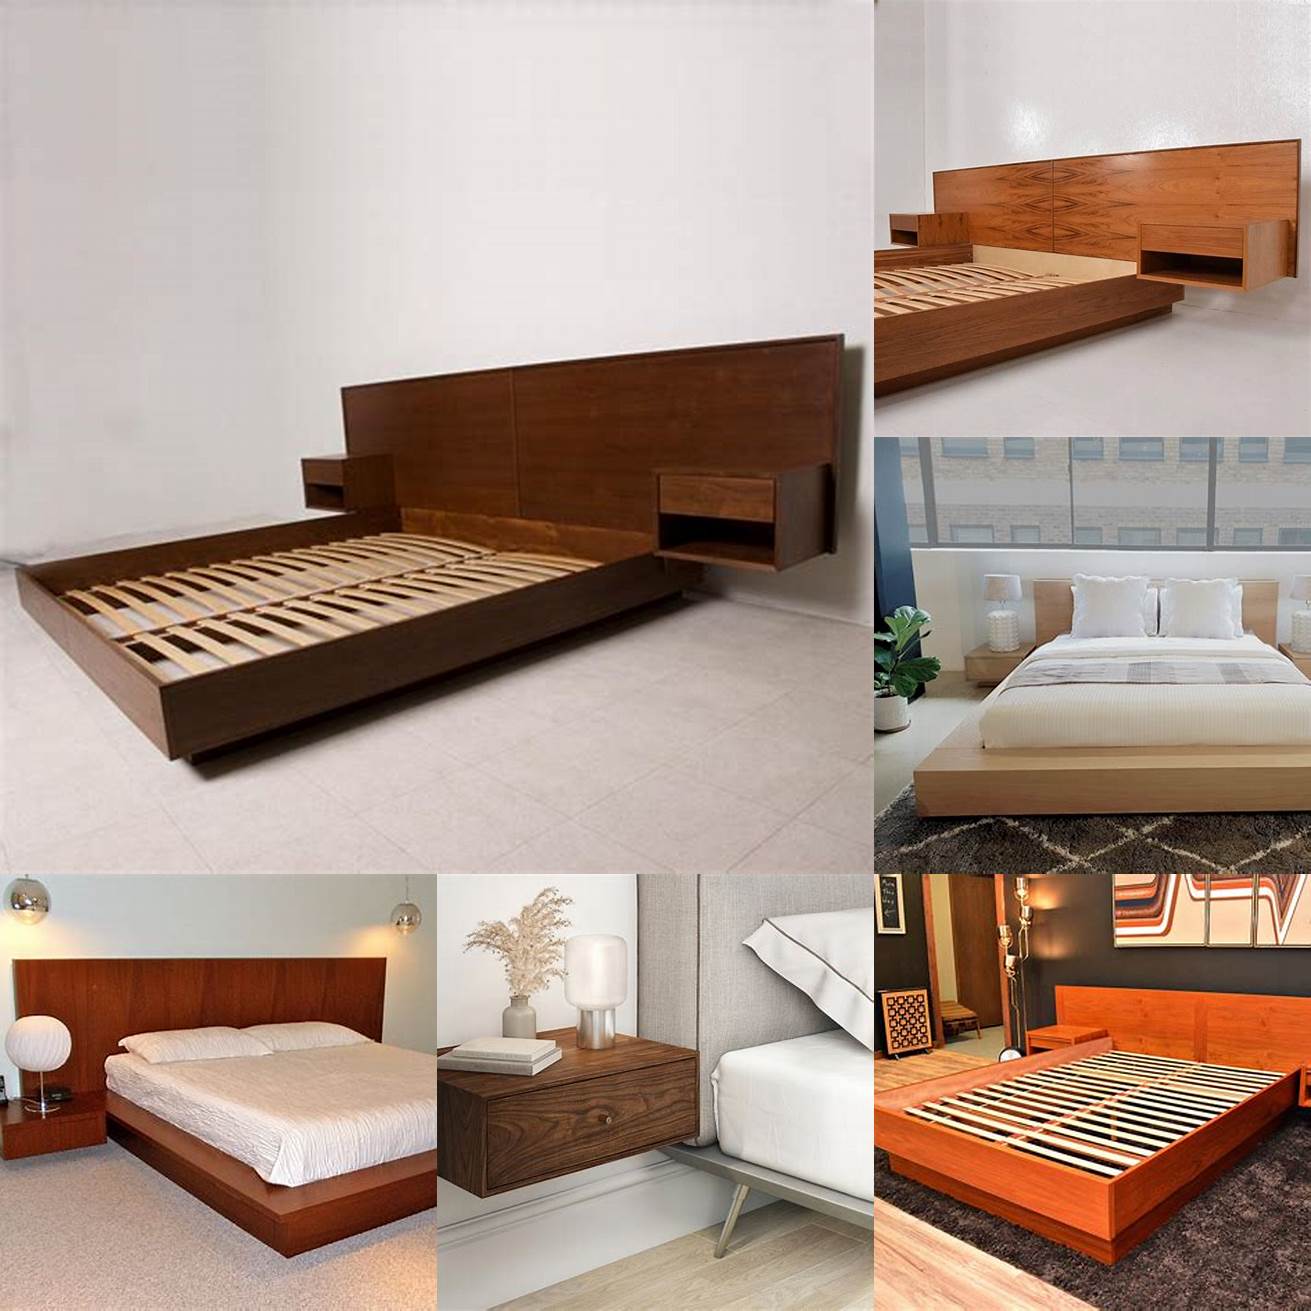 Modern platform bed with floating nightstands